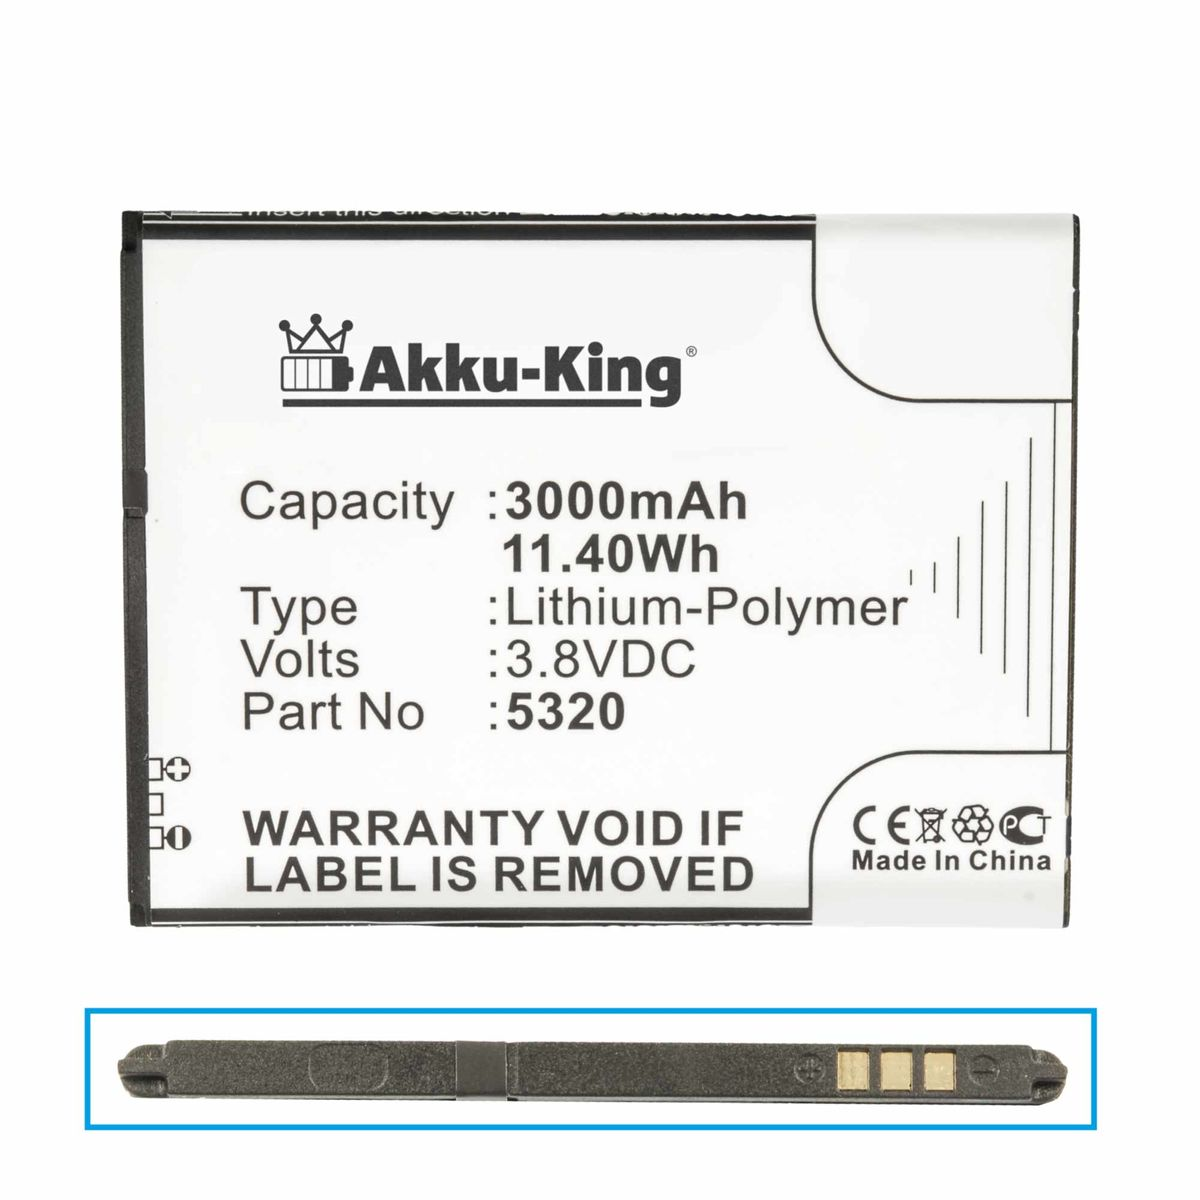 5320 mit 3.8 kompatibel Li-Polymer Akku Handy-Akku, AKKU-KING Wiko 3000mAh Volt,